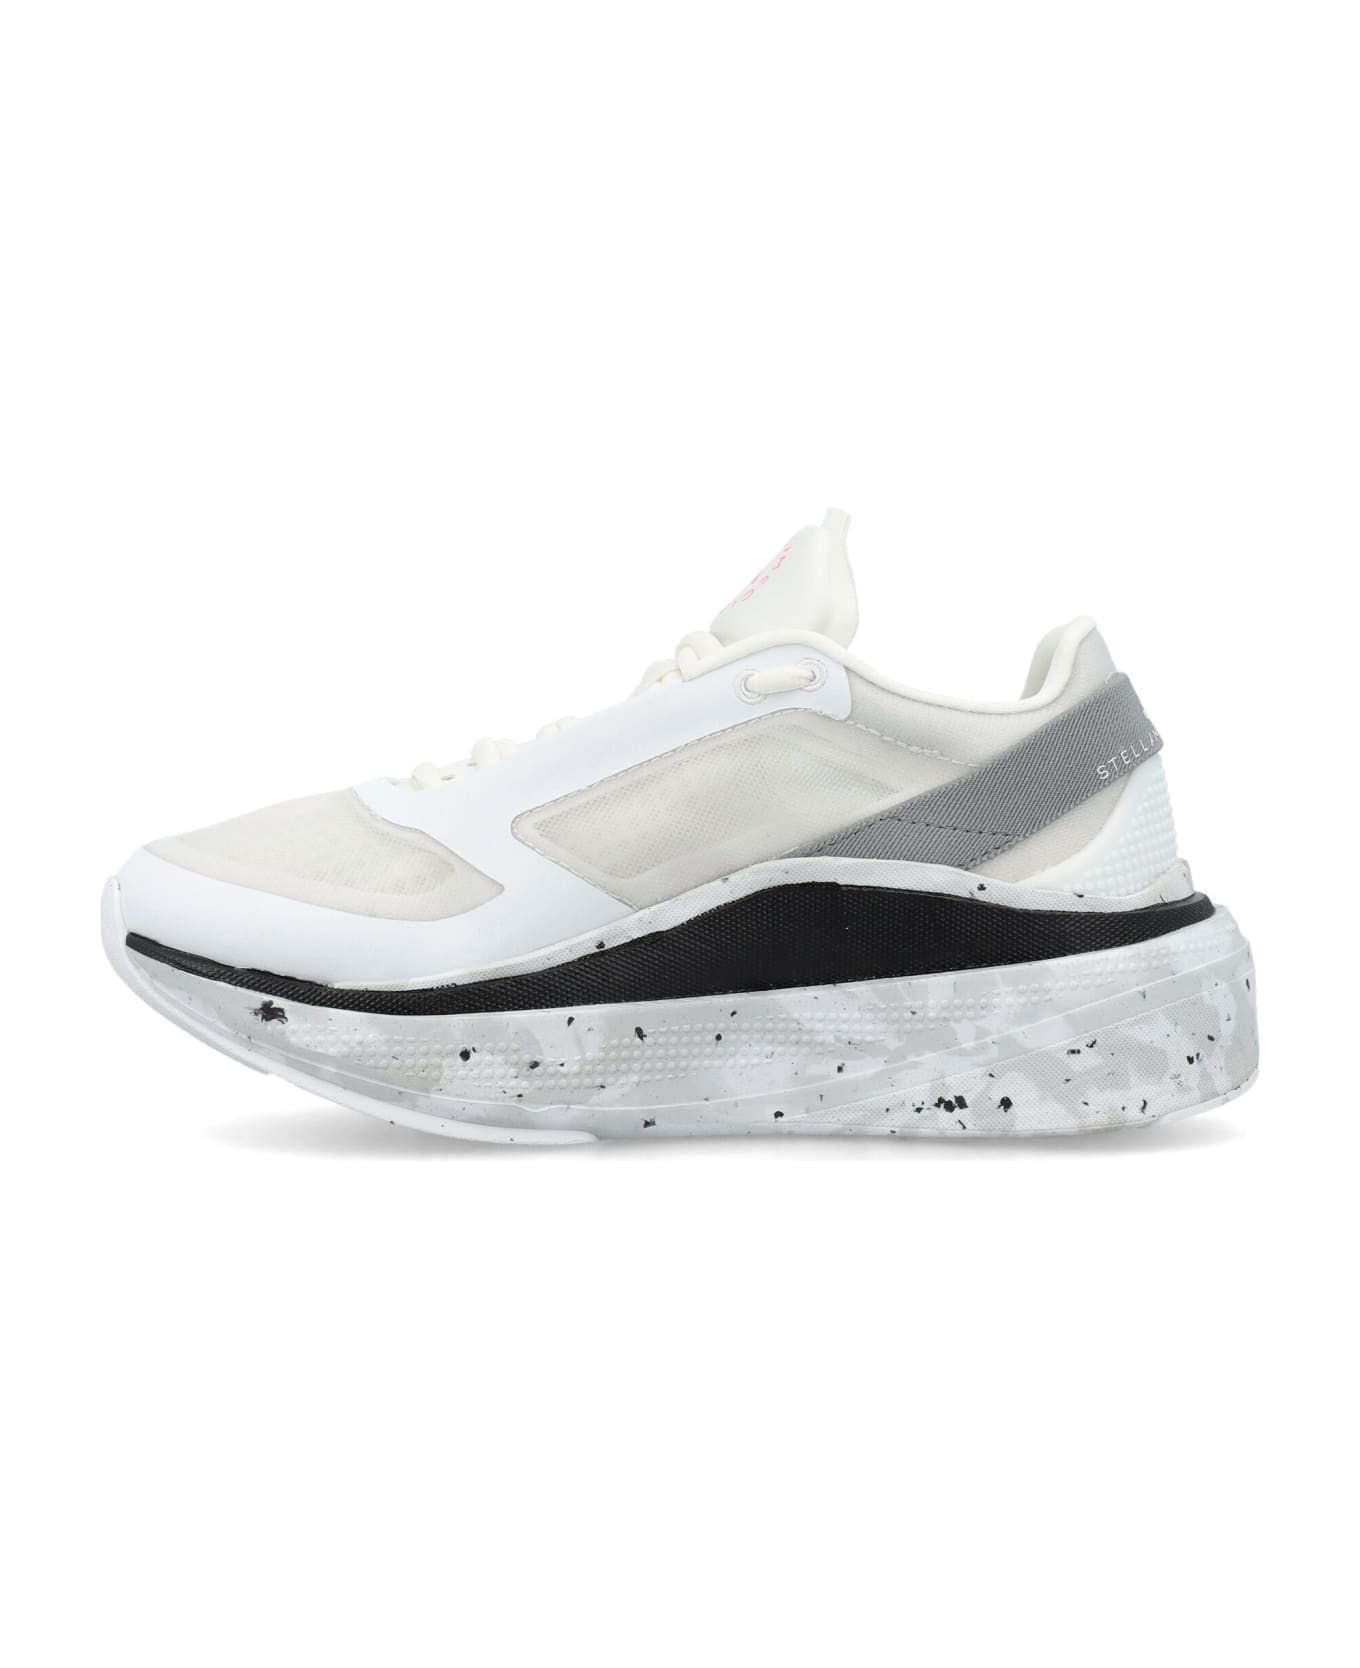 Adidas by Stella McCartney Eartlight Mesh Running Shoes Woman - WHITE/GREY/BLACK